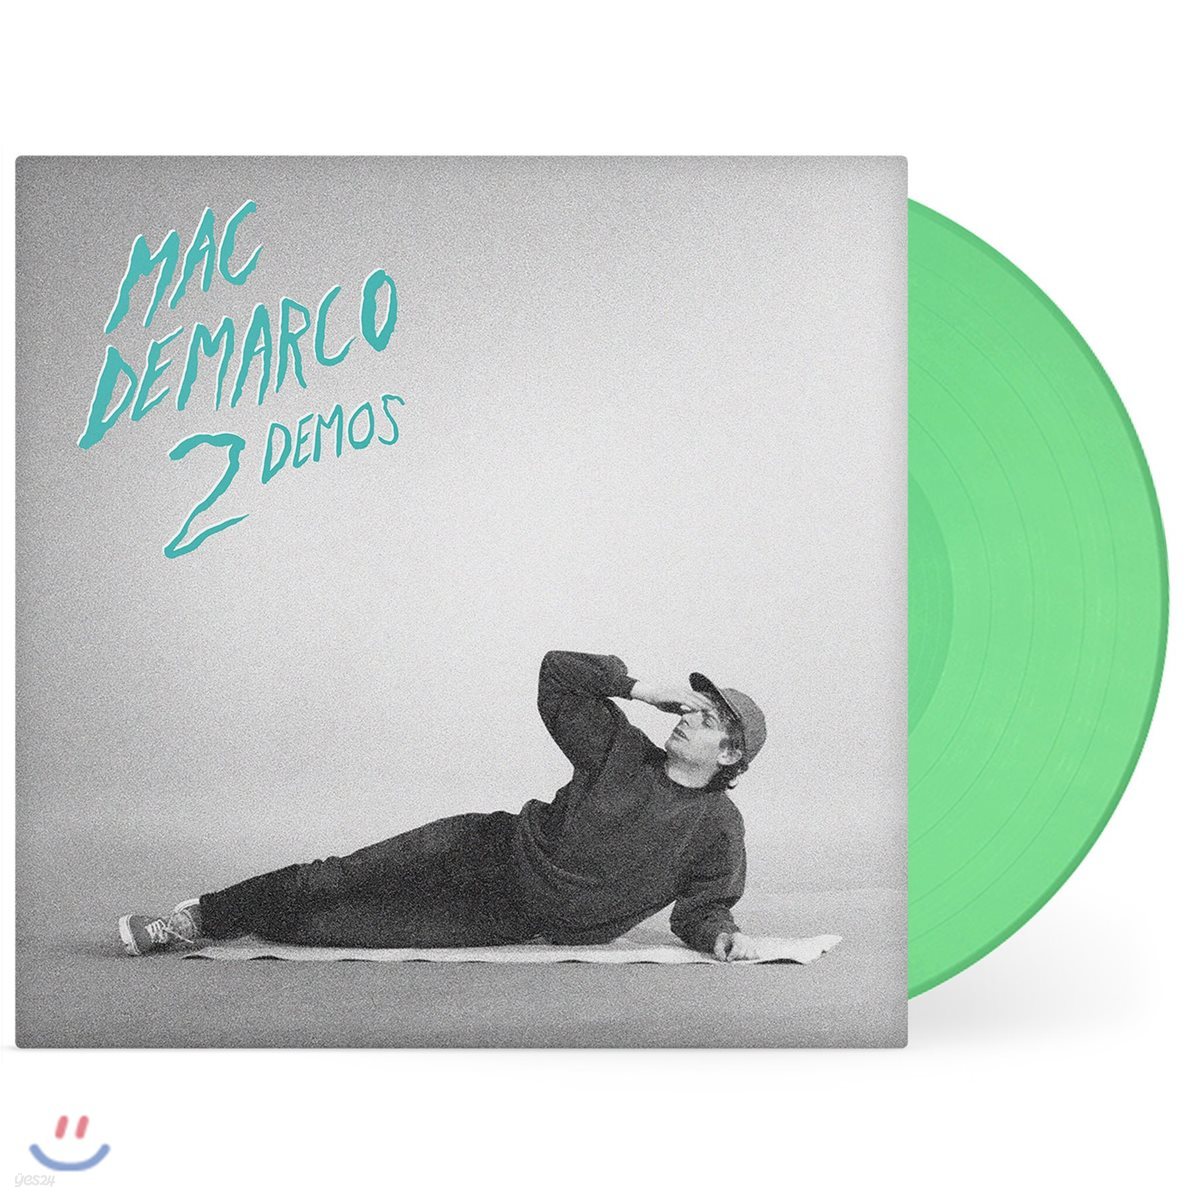 Mac DeMarco (맥 드마르코) - 2 Demos [그린 컬러 LP]